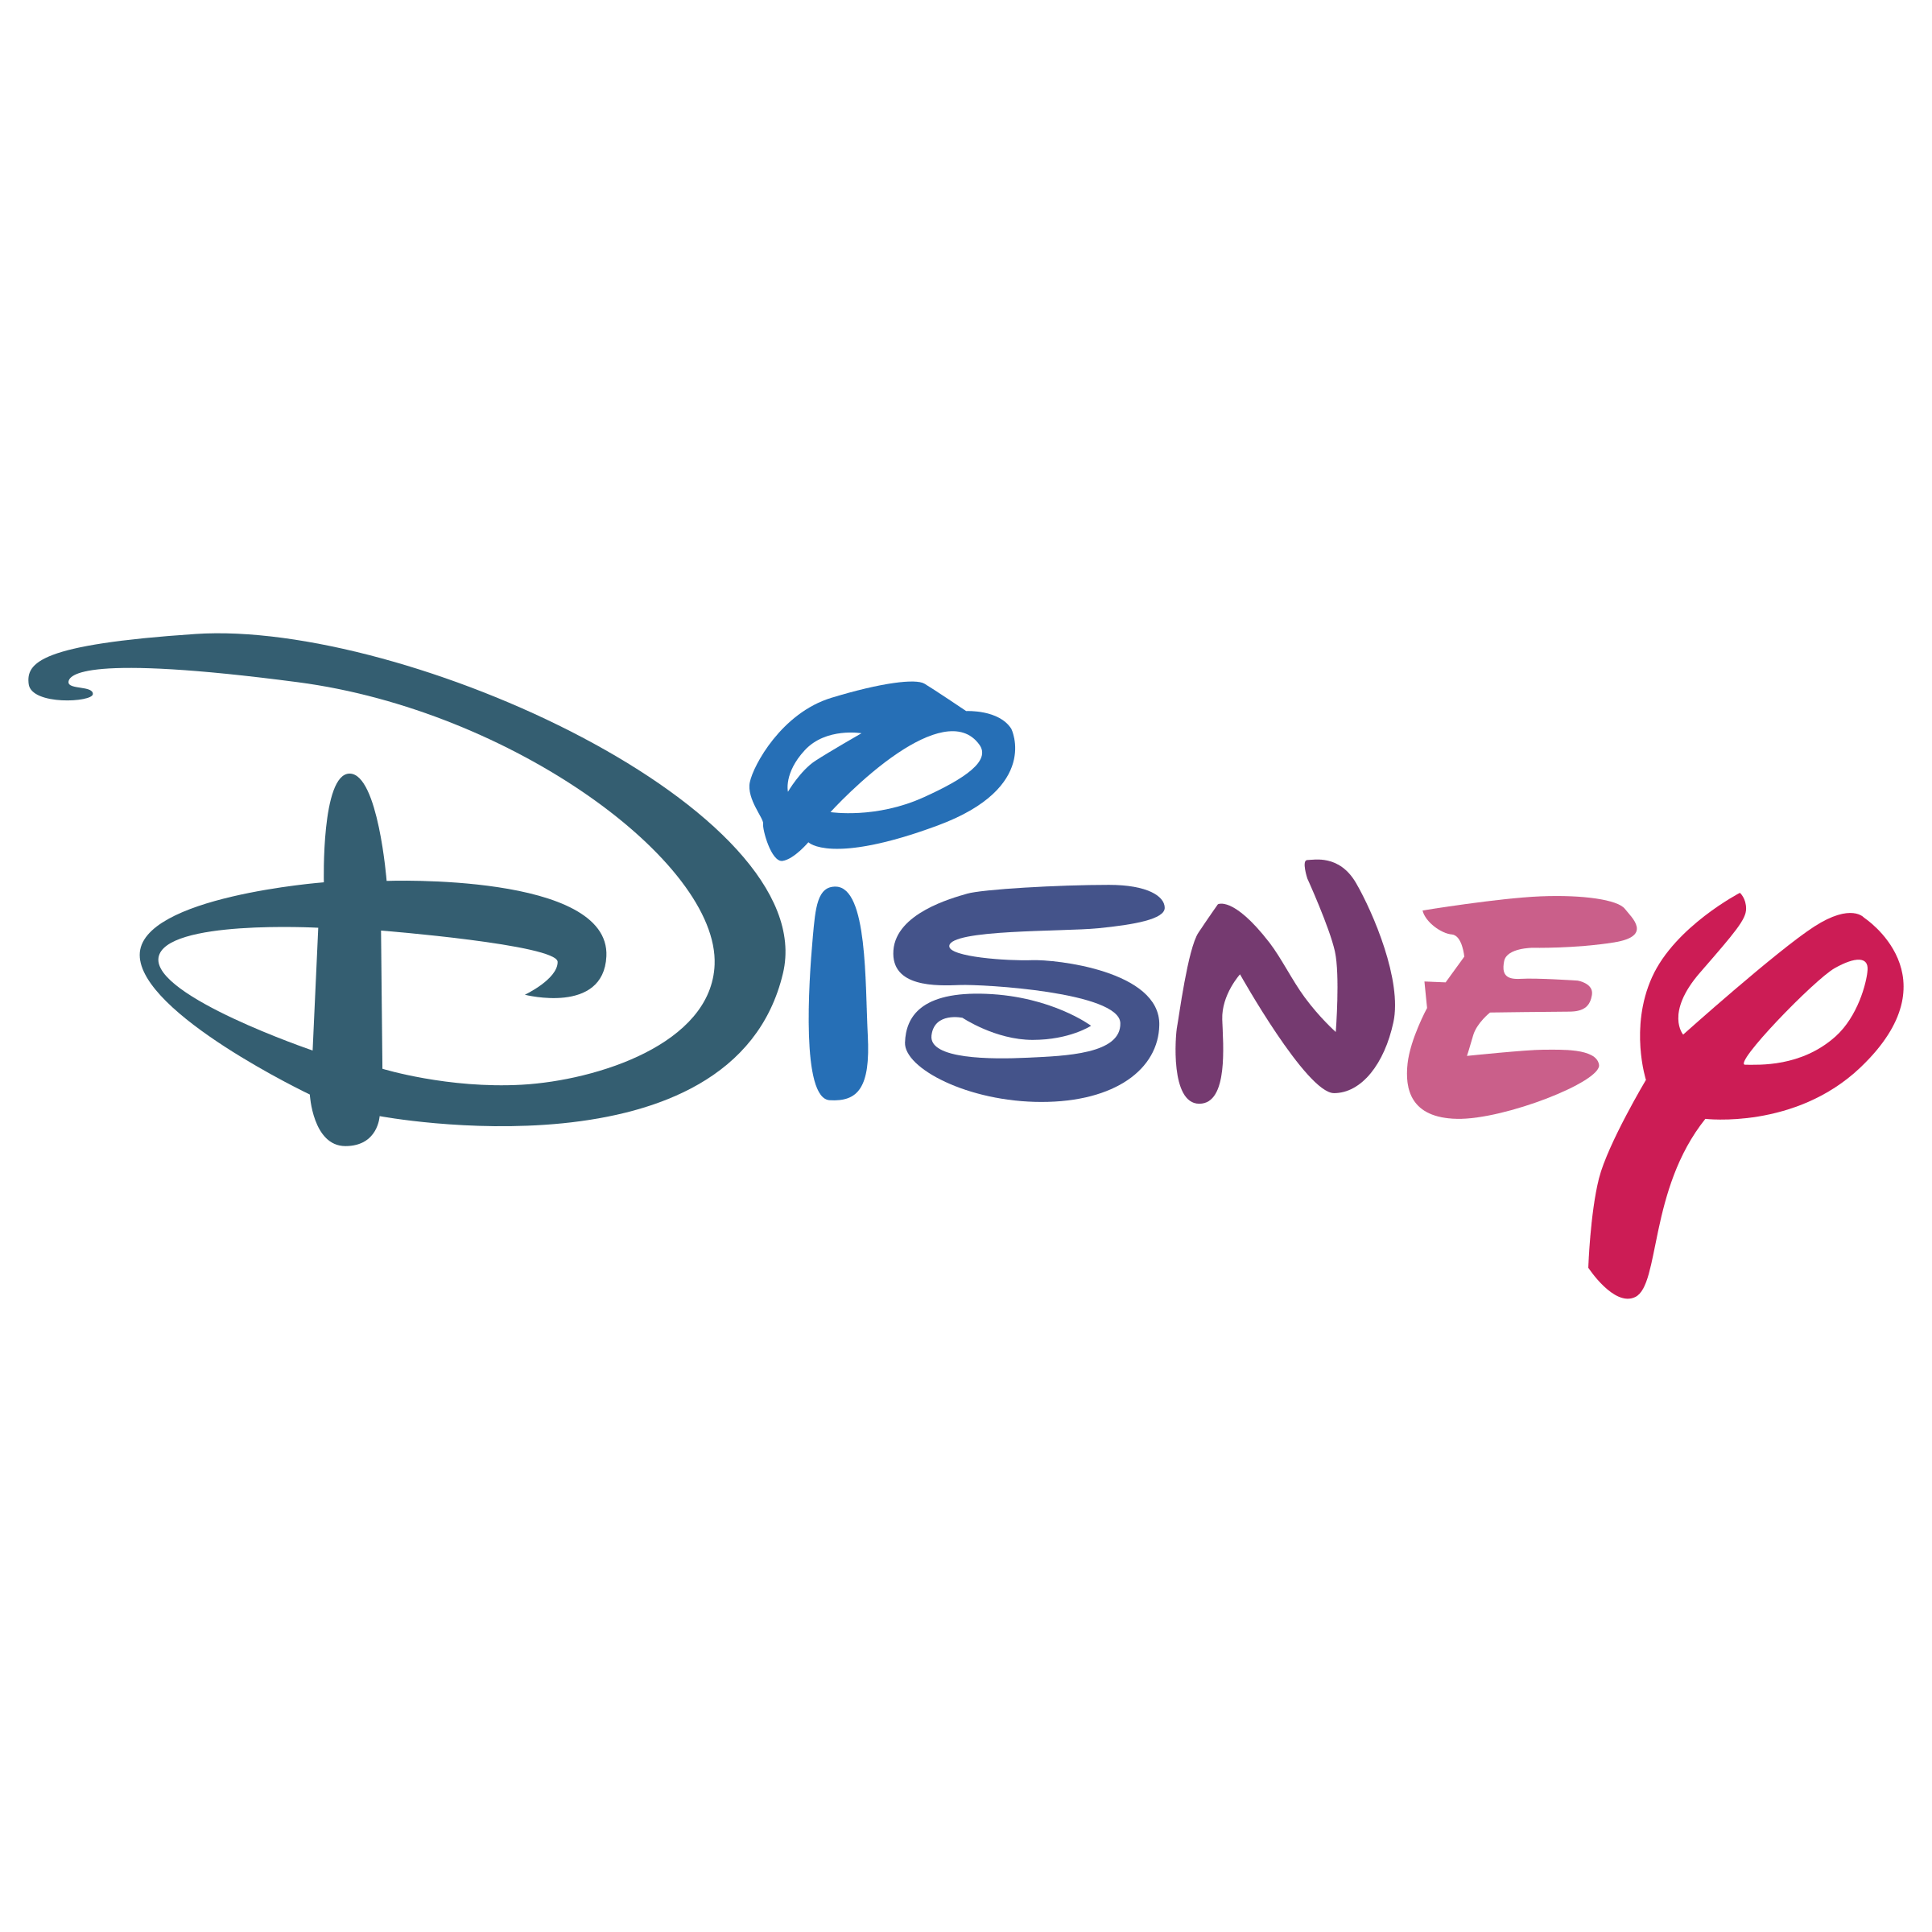 Disnesy Logo - Disney Logo PNG Transparent & SVG Vector - Freebie Supply